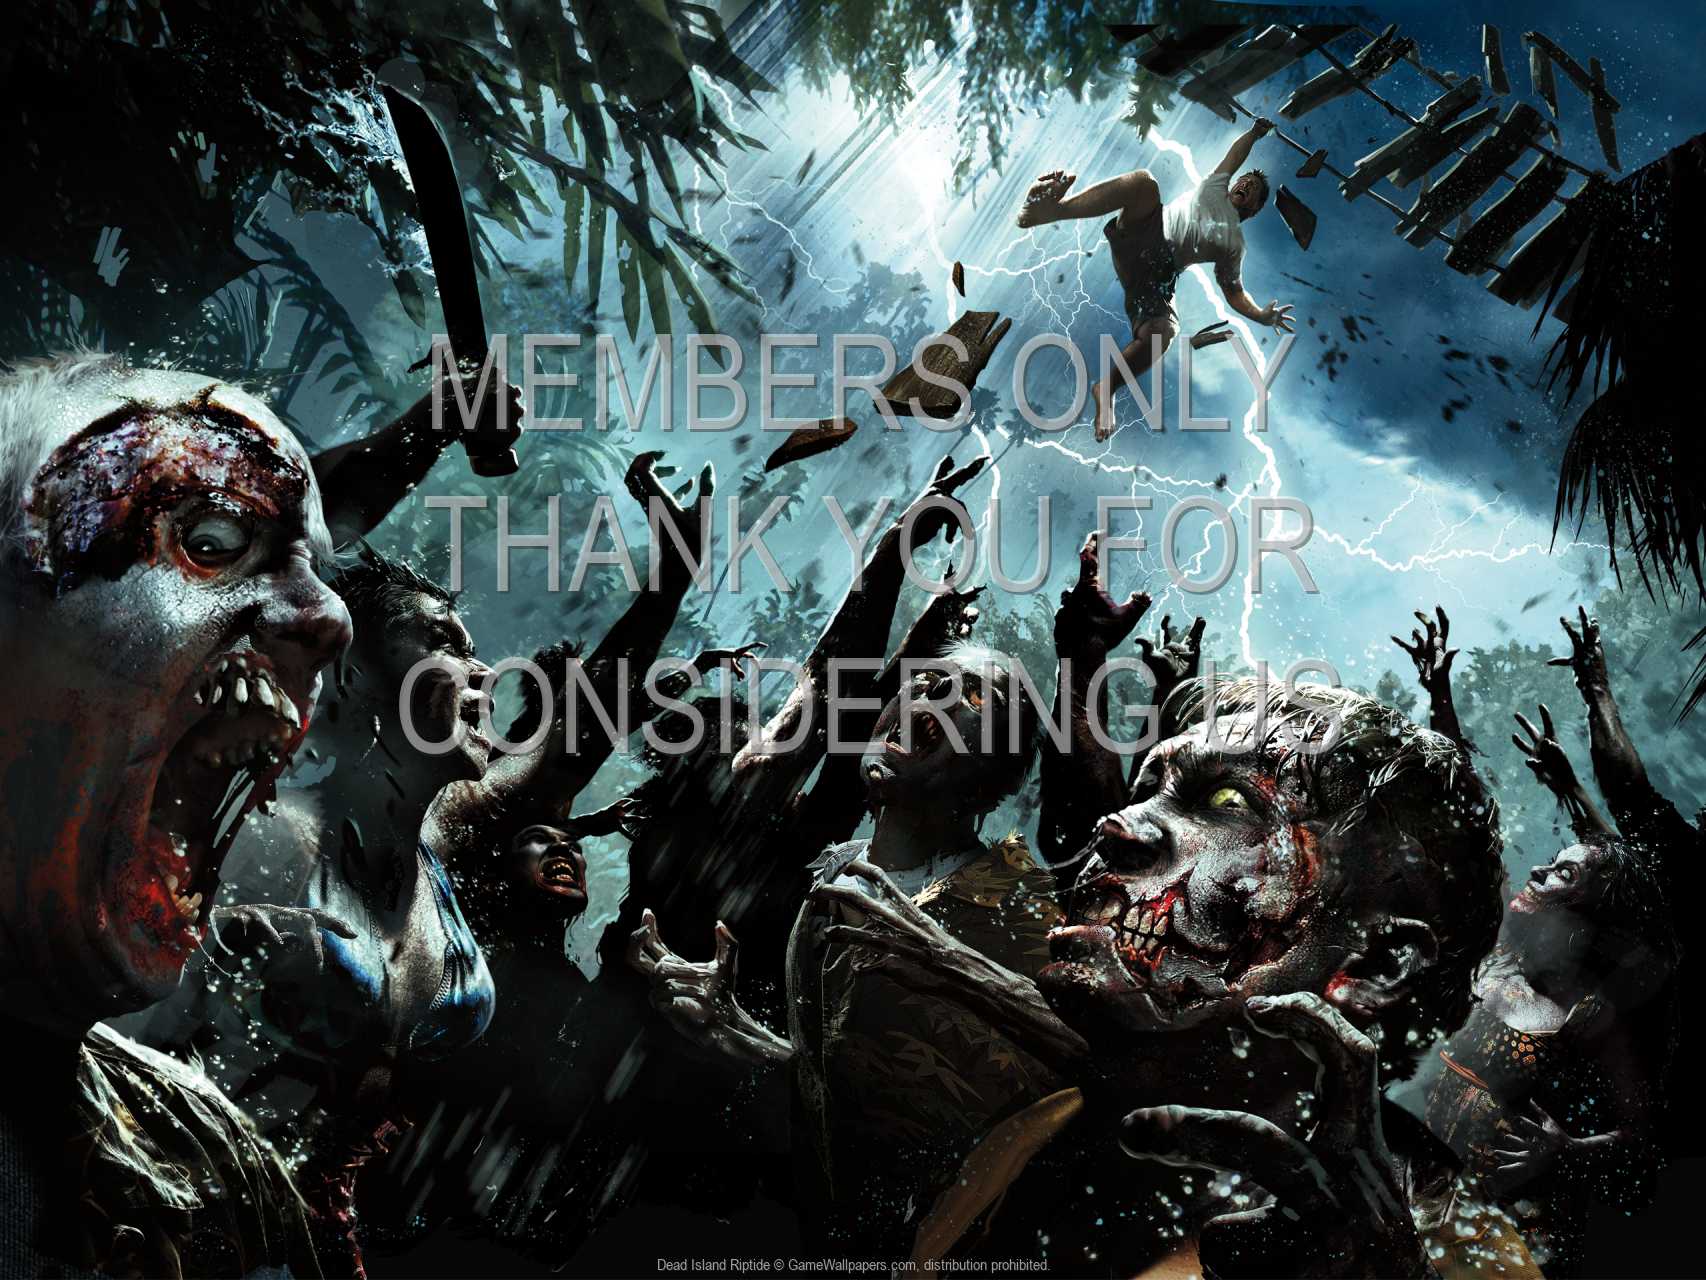 Dead Island Riptide 720p Horizontal Mobile wallpaper or background 02